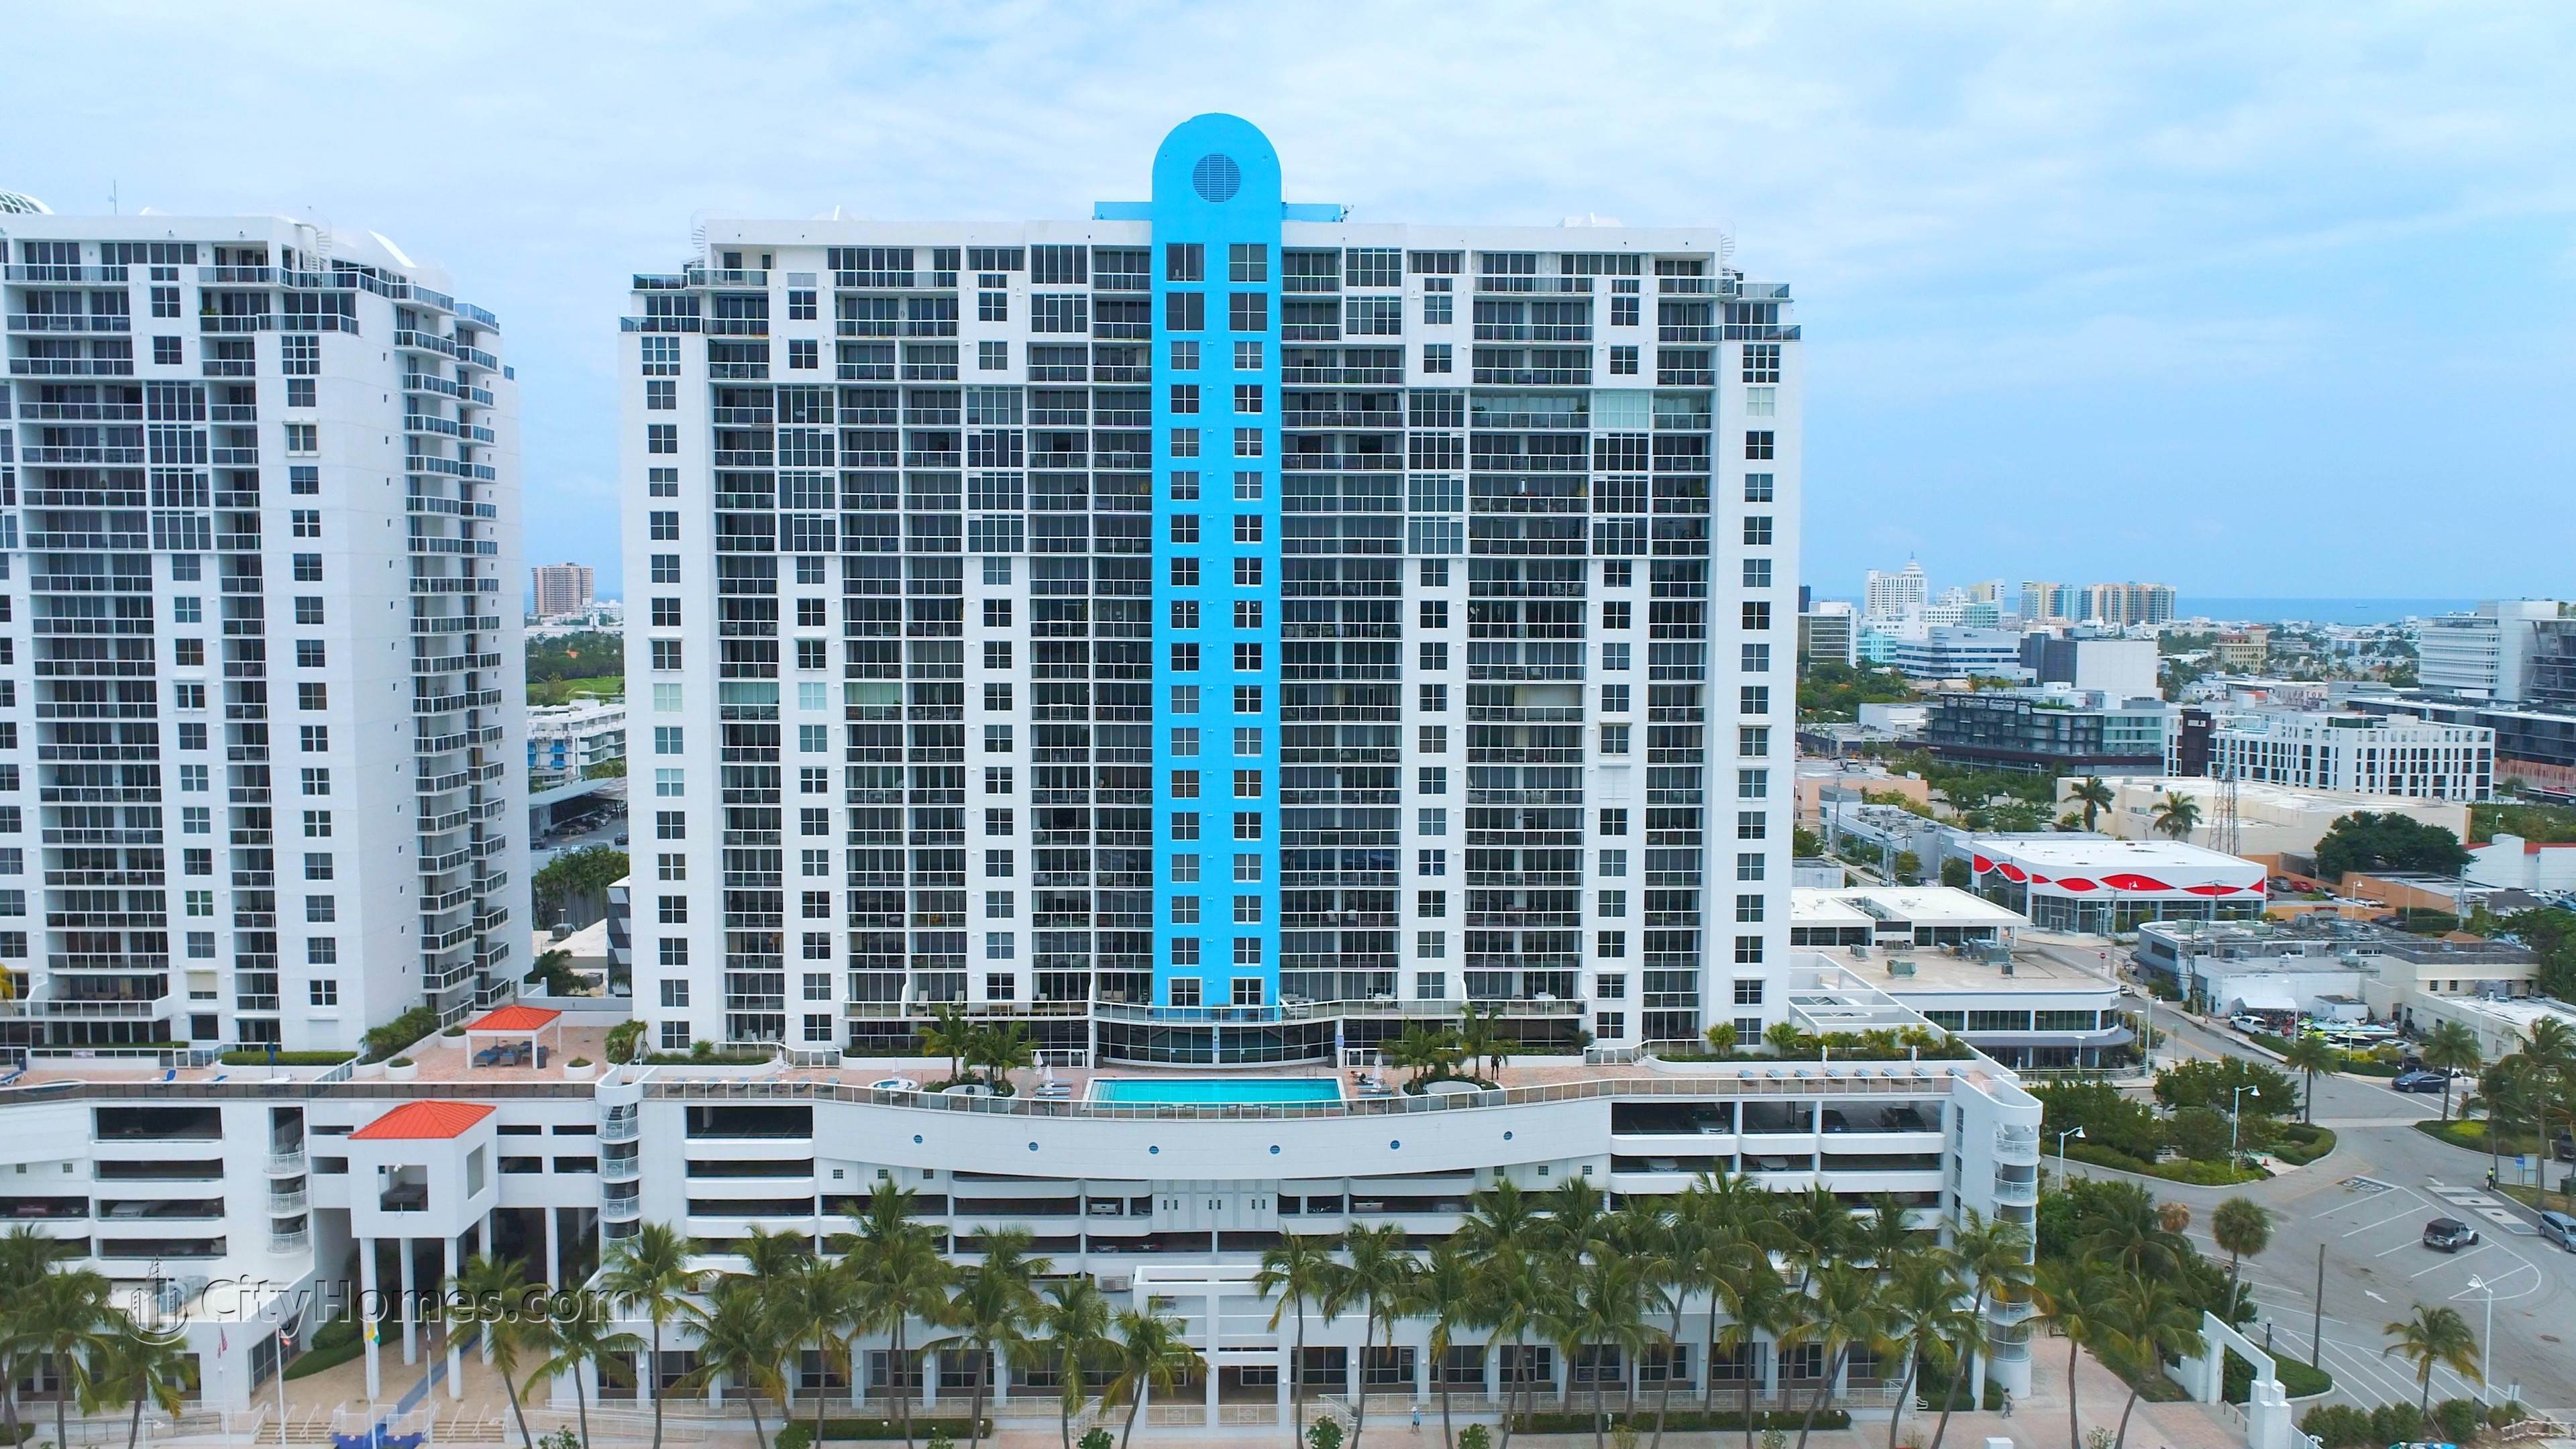 SUNSET HARBOUR SOUTH здание в 1800 Sunset Harbour Drive, Mid Beach, Miami Beach, FL 33139